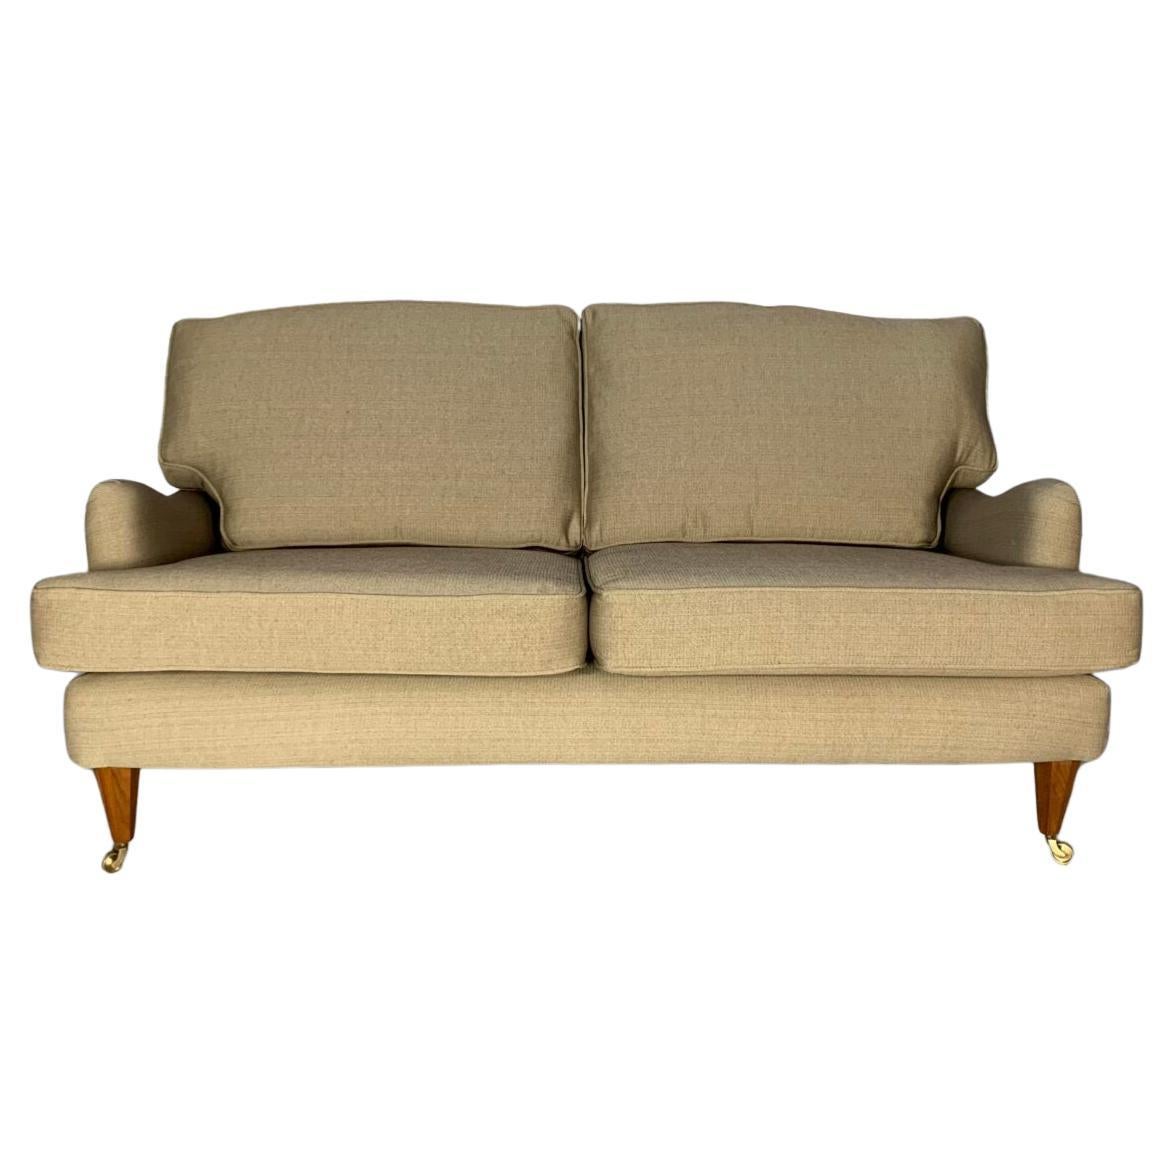 Linley 2,5-Sitz Howard-Design-Sofa aus geflochtenem goldenem Stoff